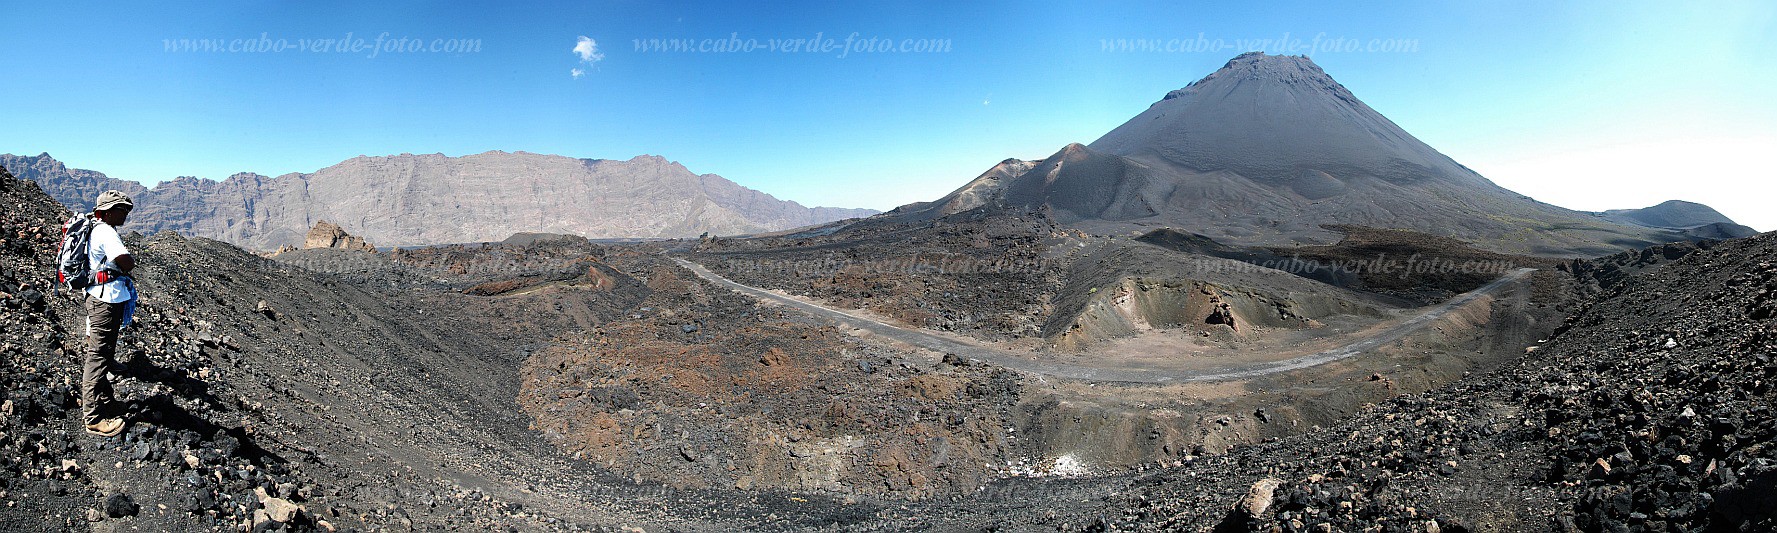 Fogo : Ch das Caldeiras : hiking track : Landscape MountainCabo Verde Foto Gallery